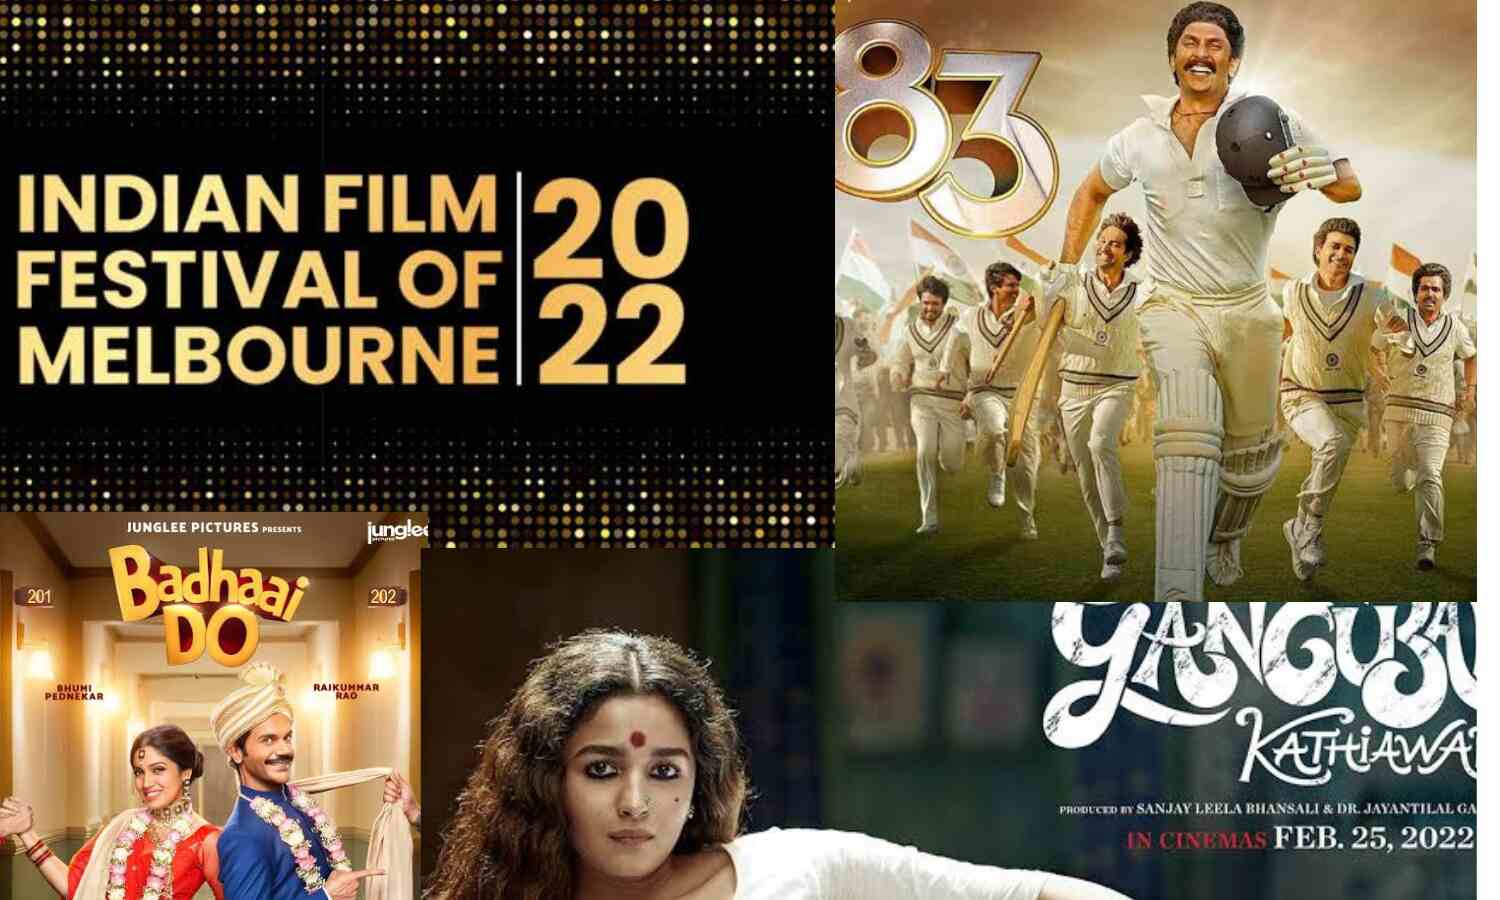 Indian Film Festival Of Melbourne 2022: These films including ‘Jai Bheem’, ‘Gangubai’ at Melbourne Indian Film Festival